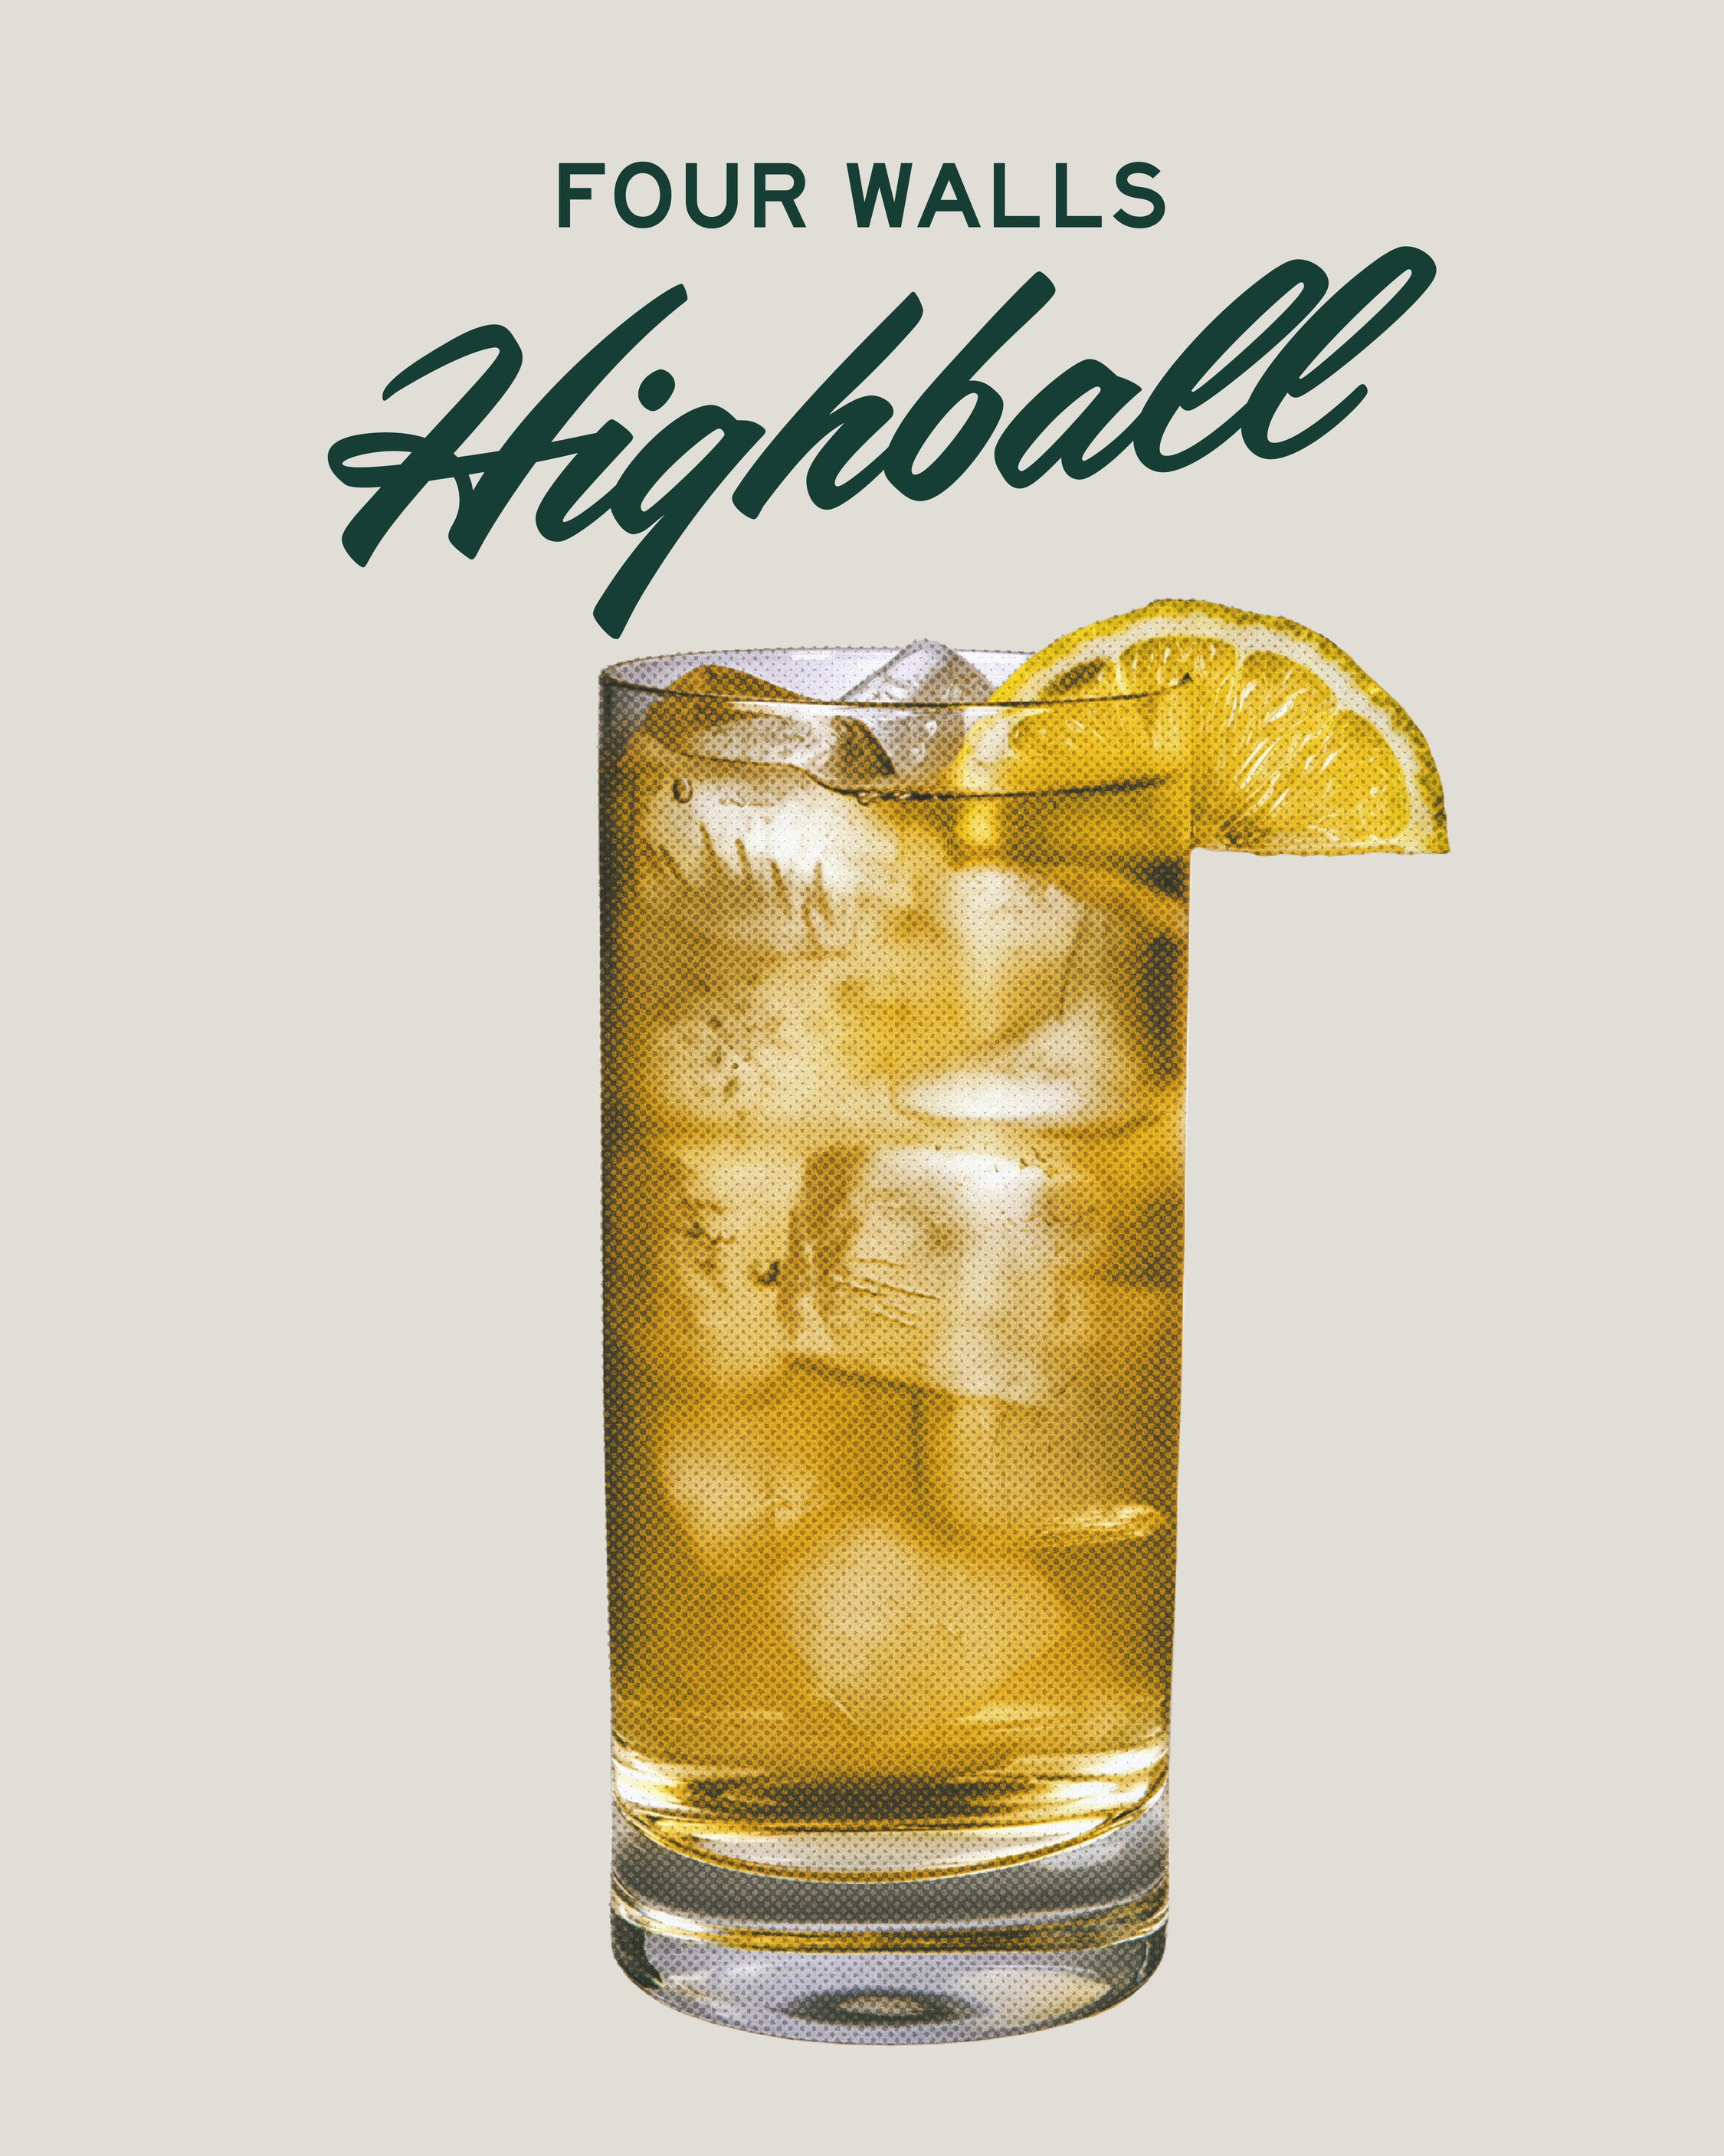 FW-cocktails_highball_1.jpg